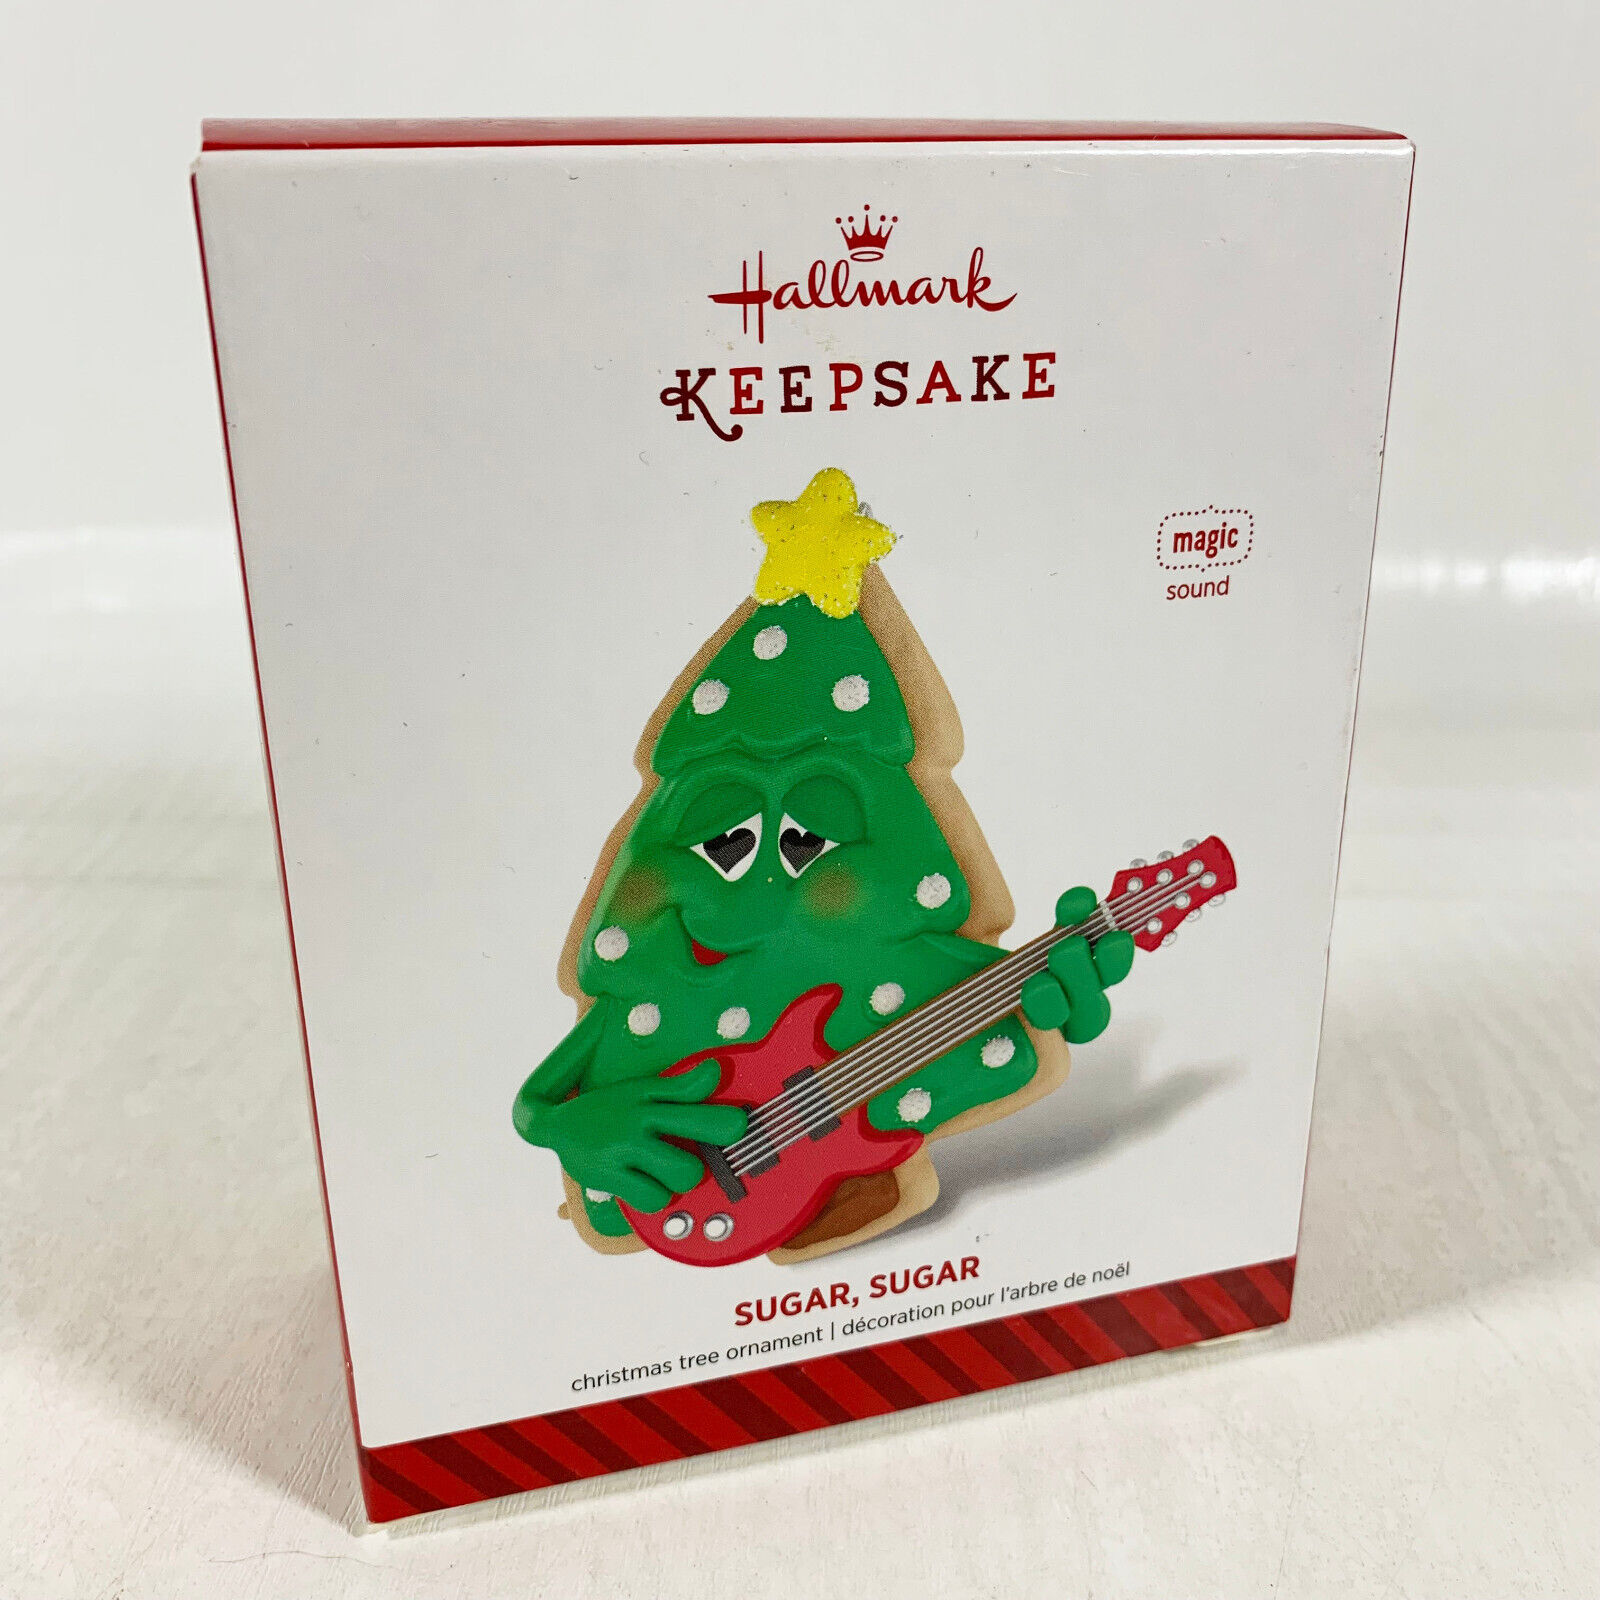 [NEW] Hallmark Keepsake Ornament - Sugar, Sugar - Christmas Tree Cookie Guitar